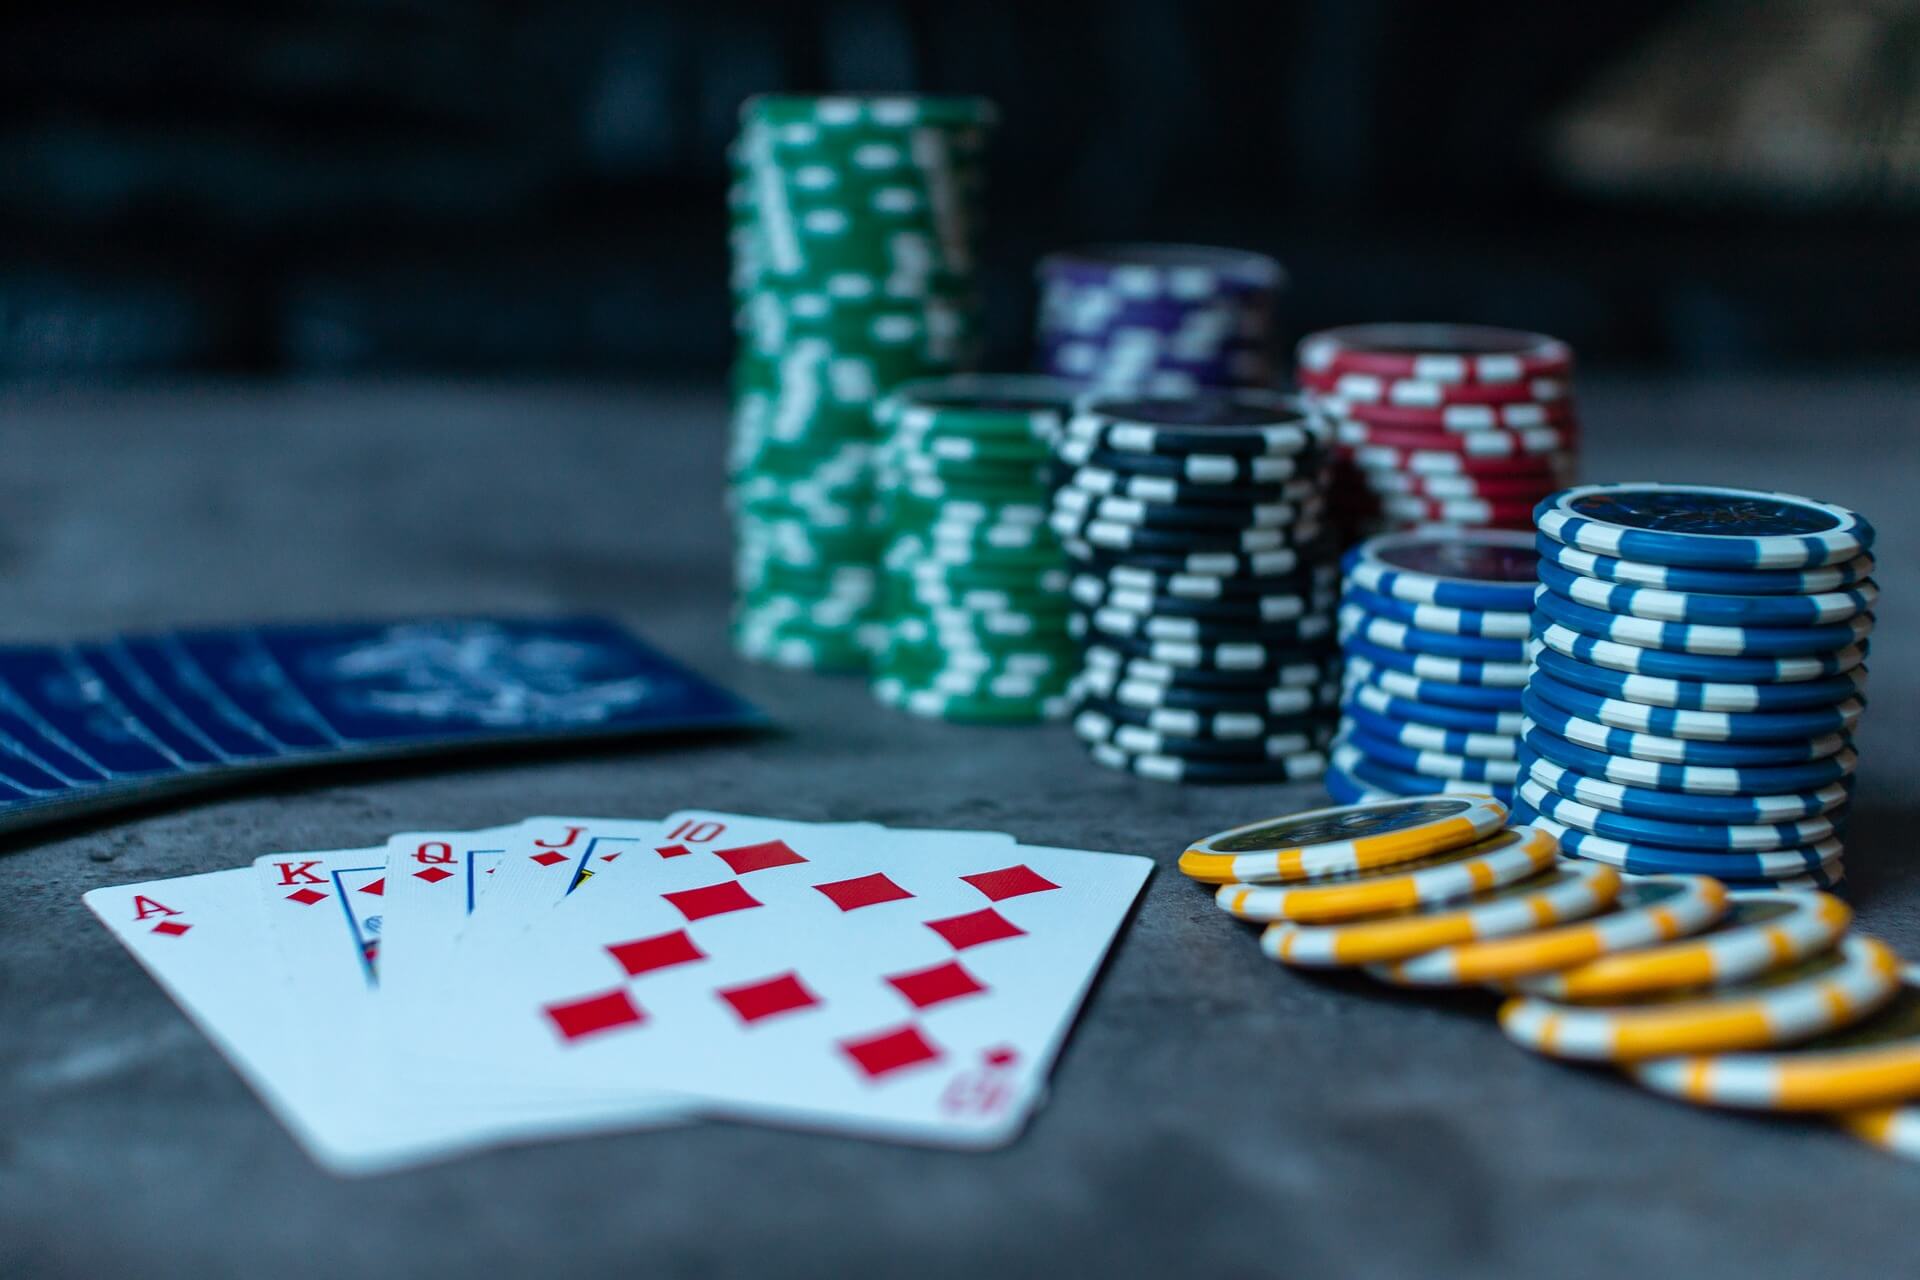 5 card poker games online